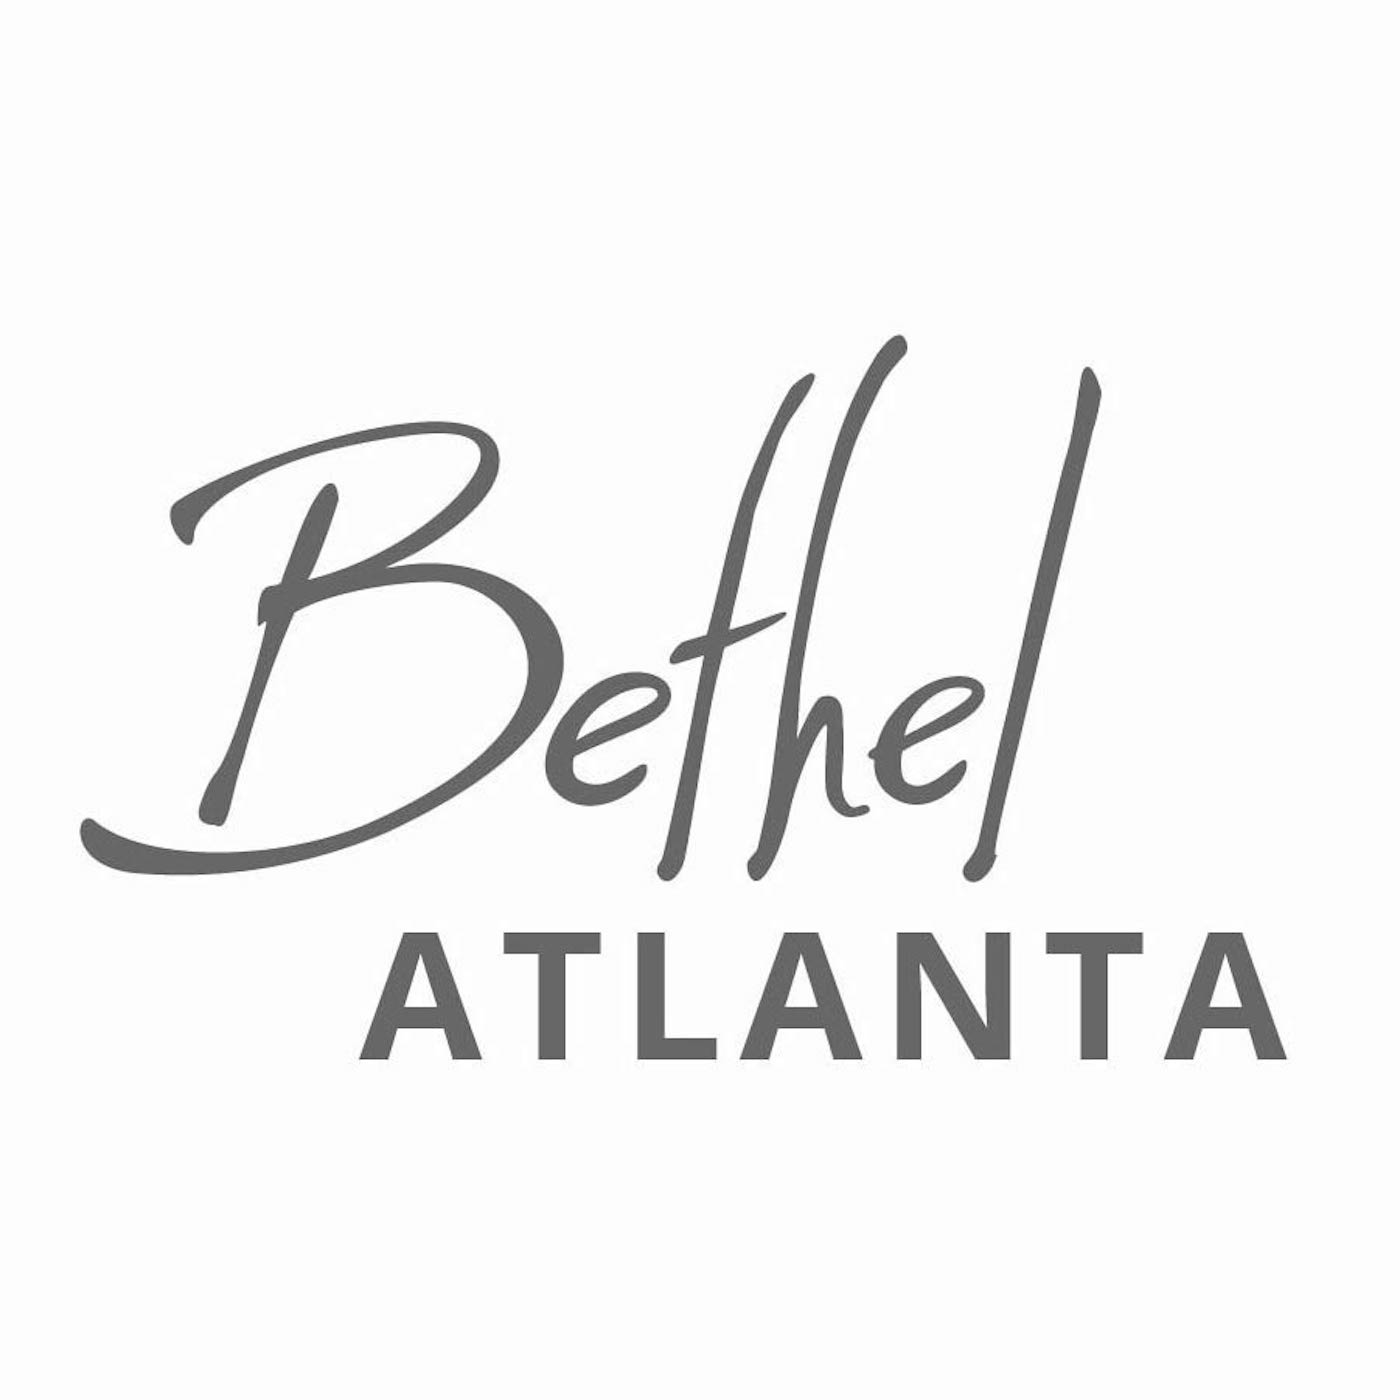 Kościół Bethel Atlanta i Szkoła BSSM